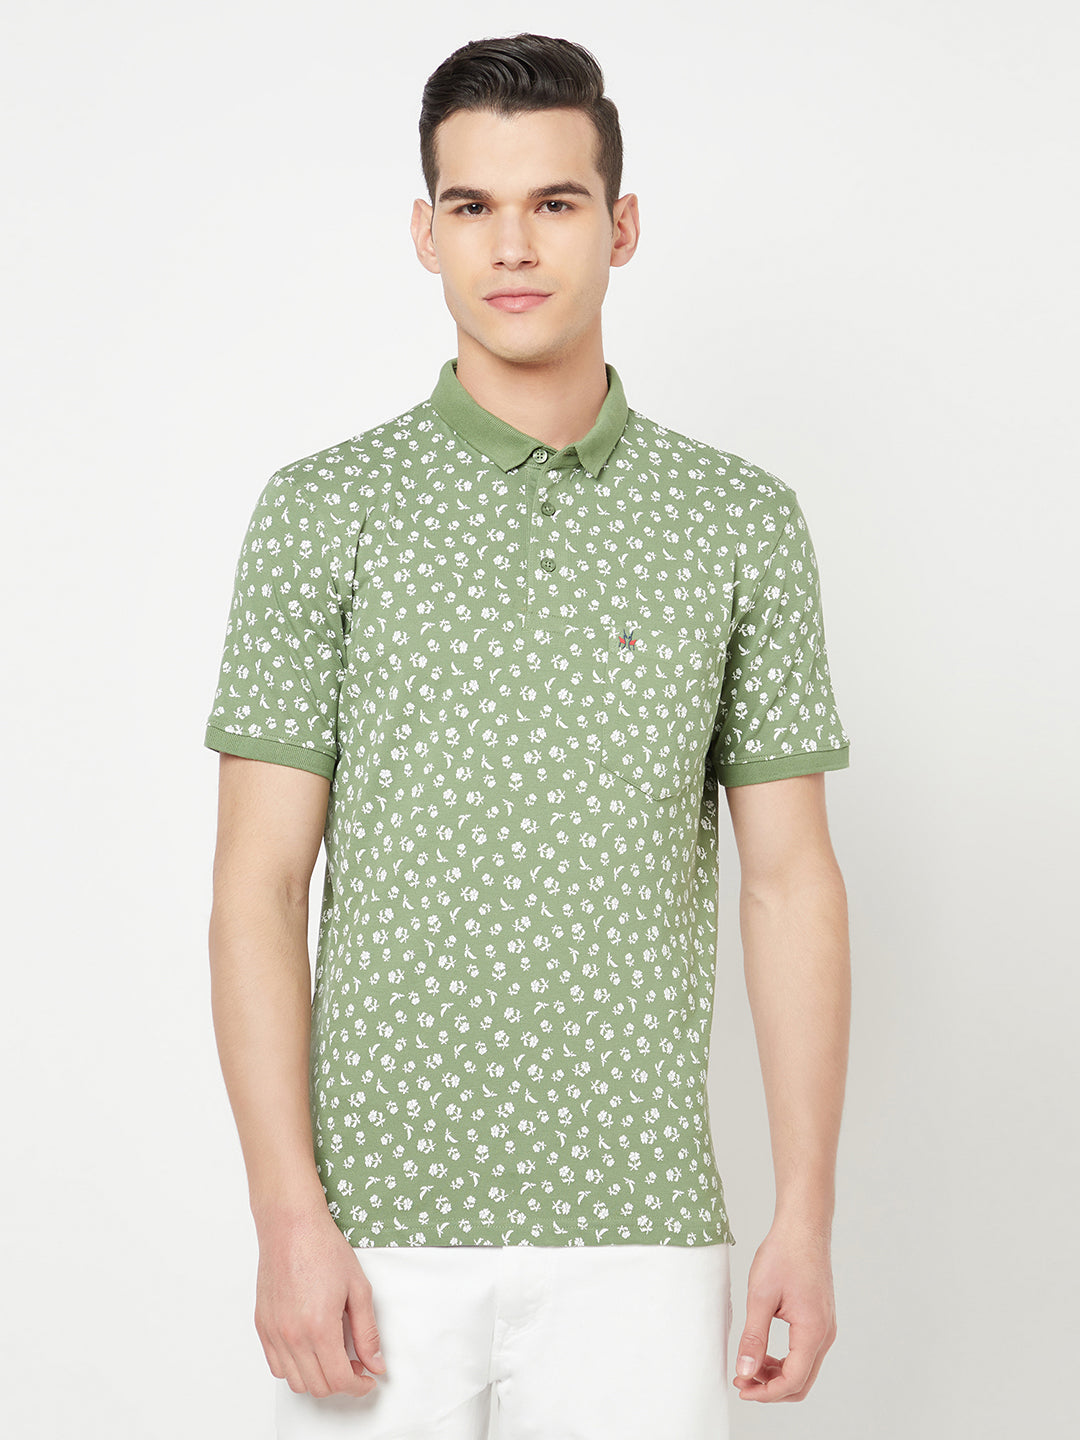 Green Floral Printed Polo T-Shirt - Men T-Shirts